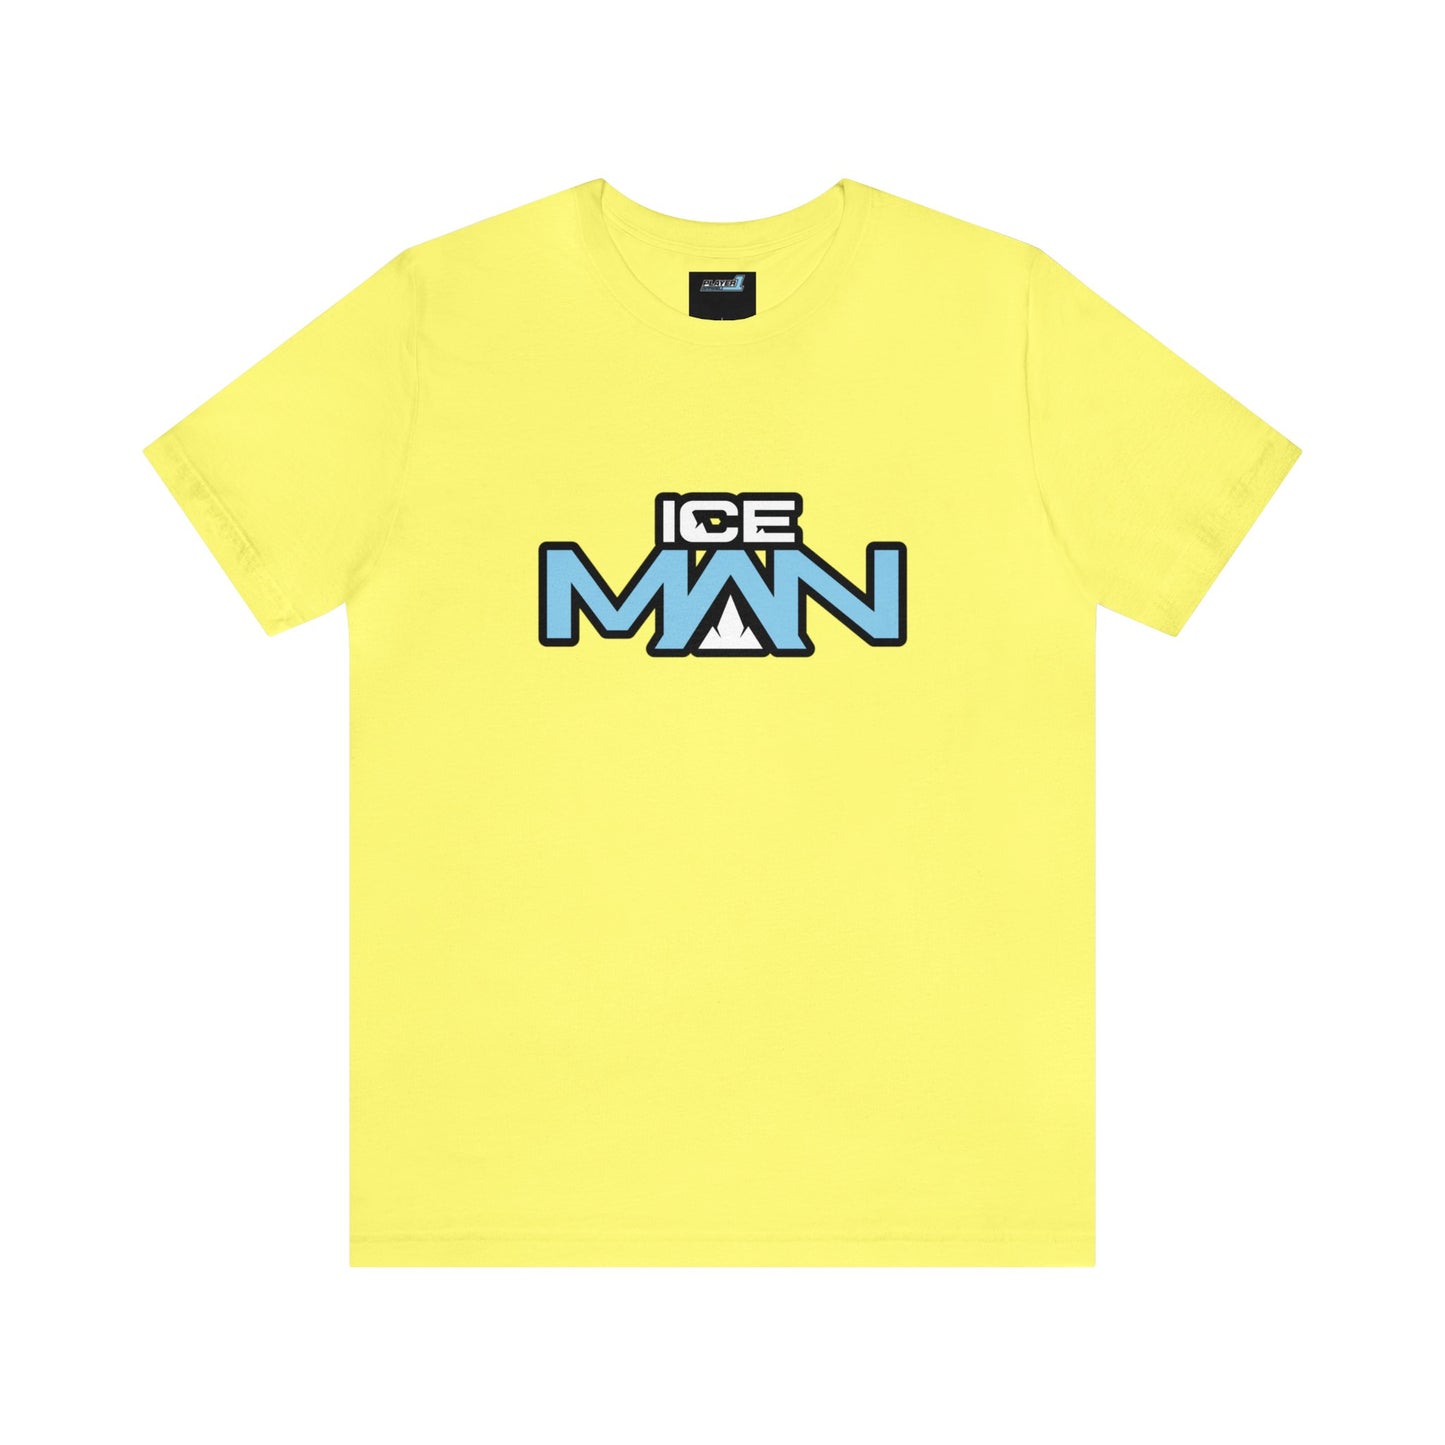 IceMan Classic Unisex T-shirt